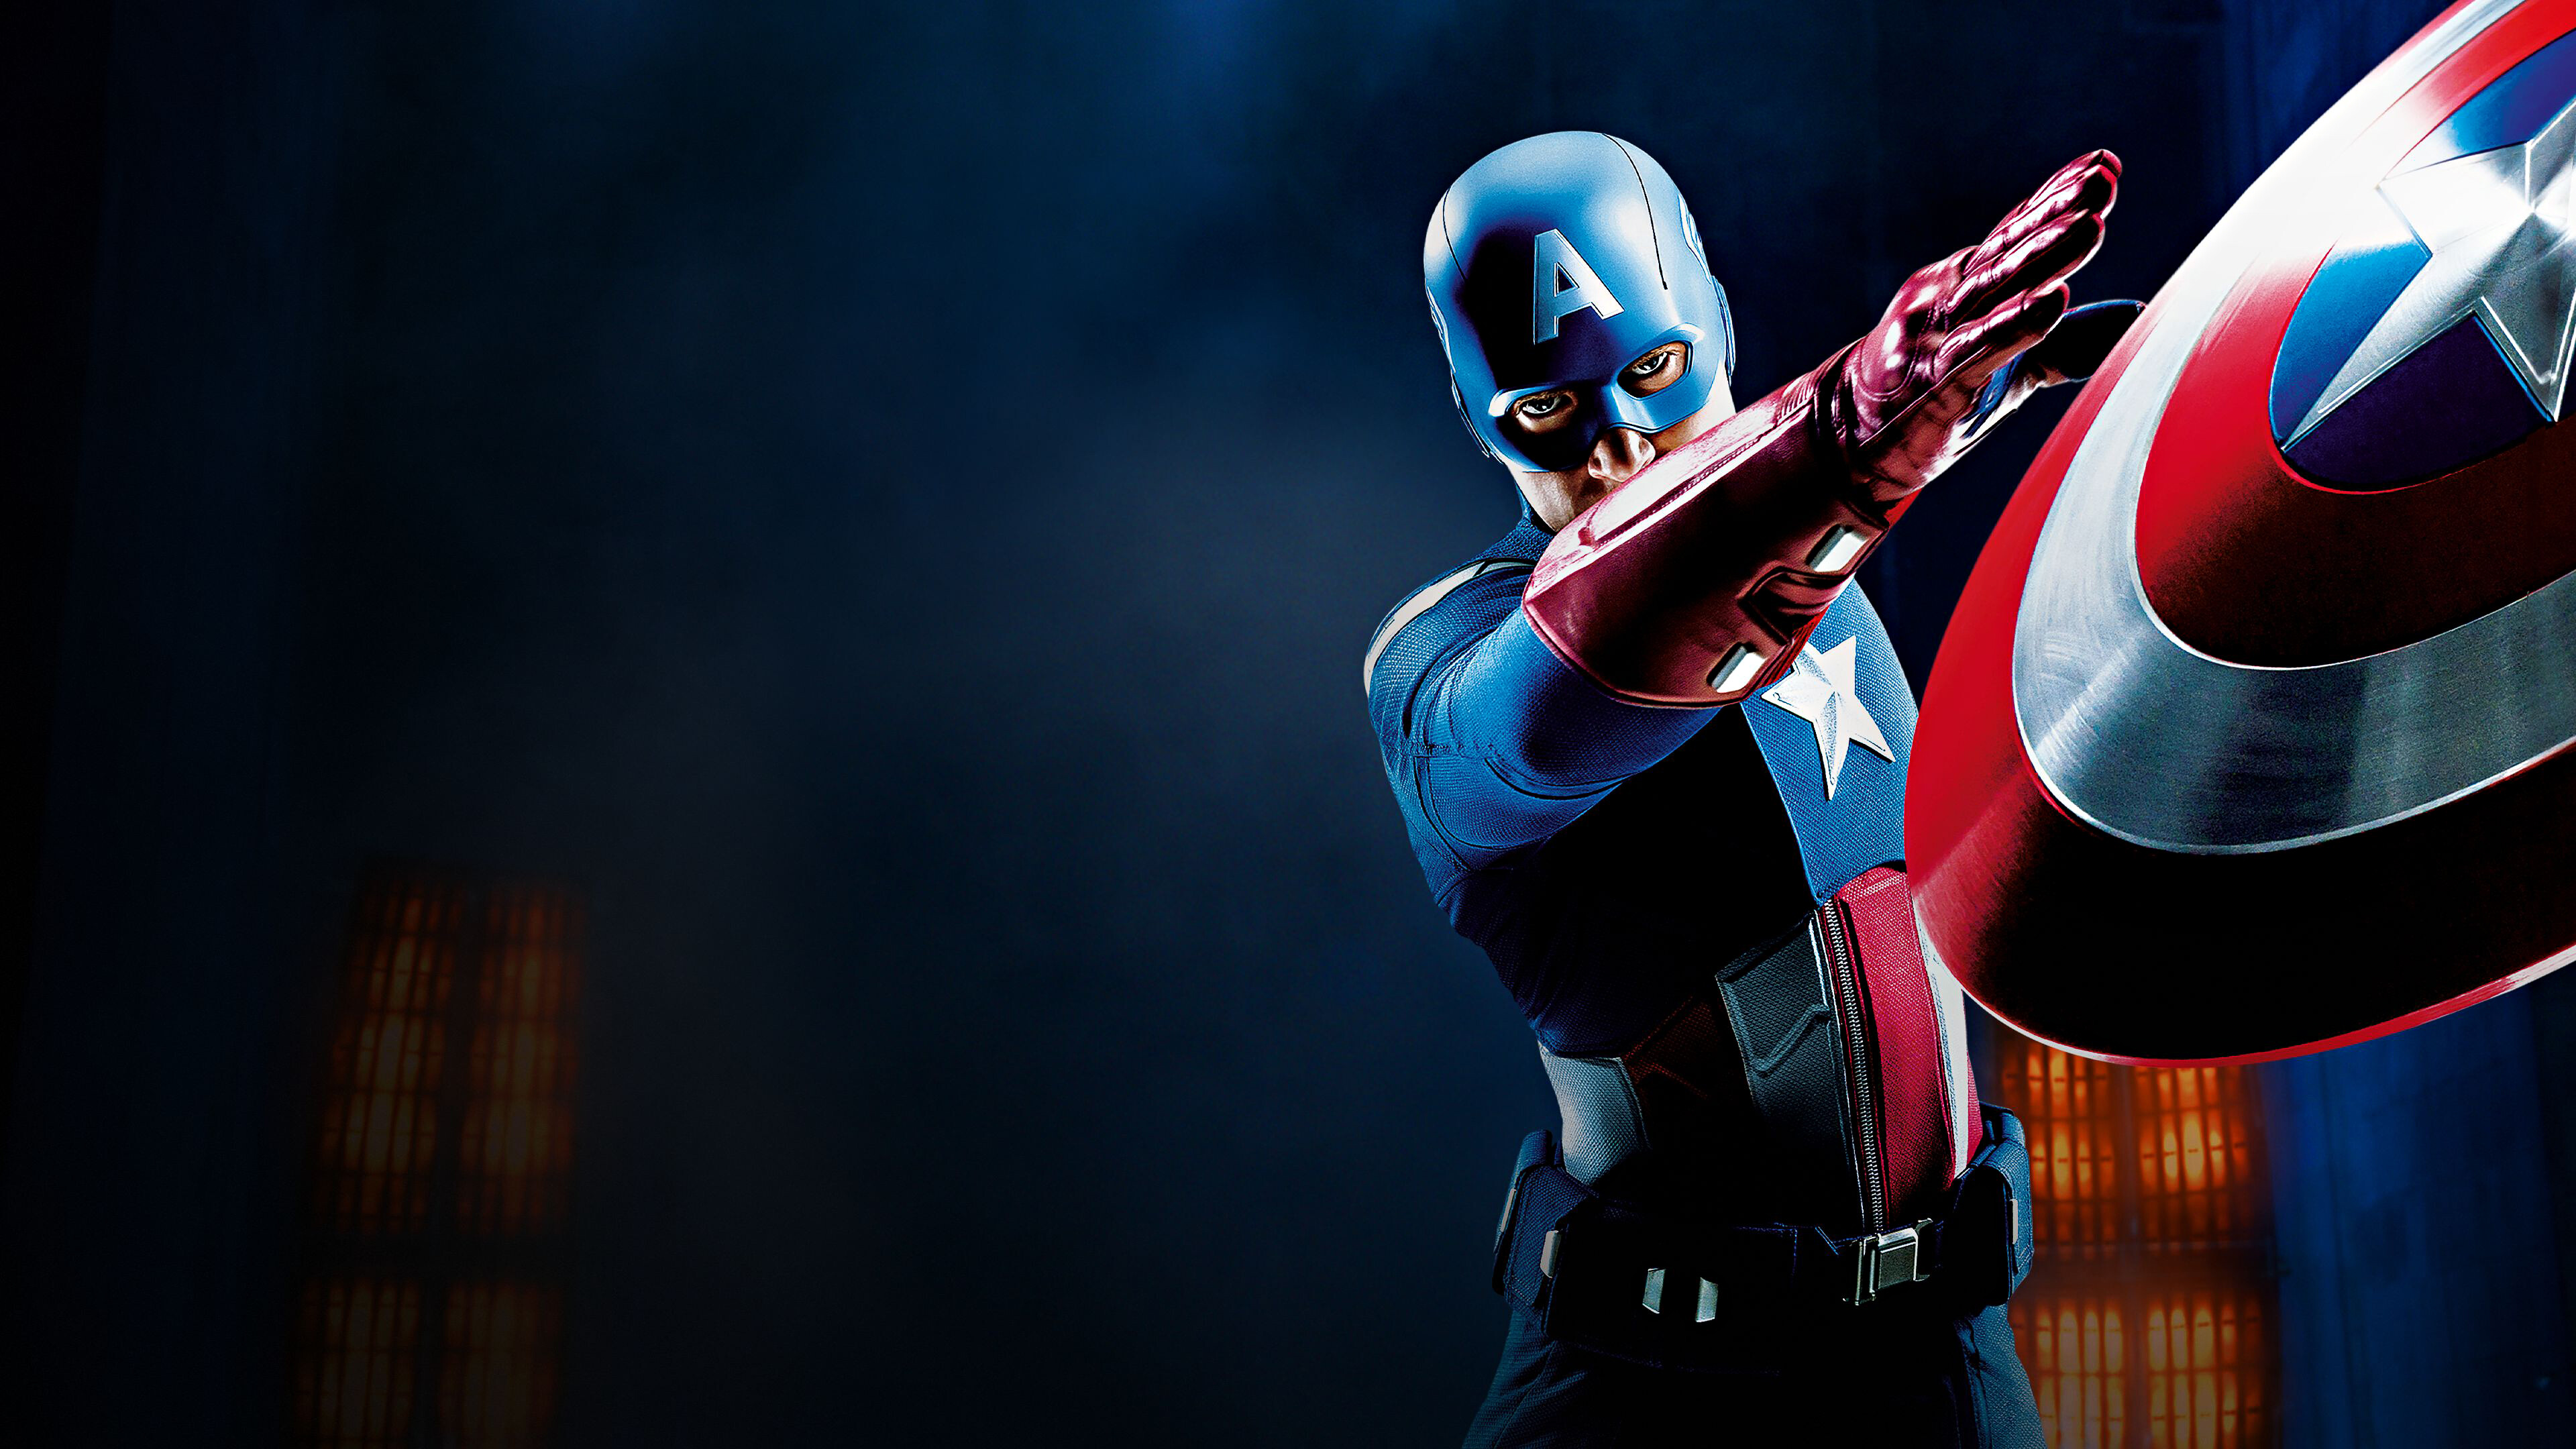 Marvel Heroes: Captain America, A superhero appearing in American comic books. 3840x2160 4K Wallpaper.